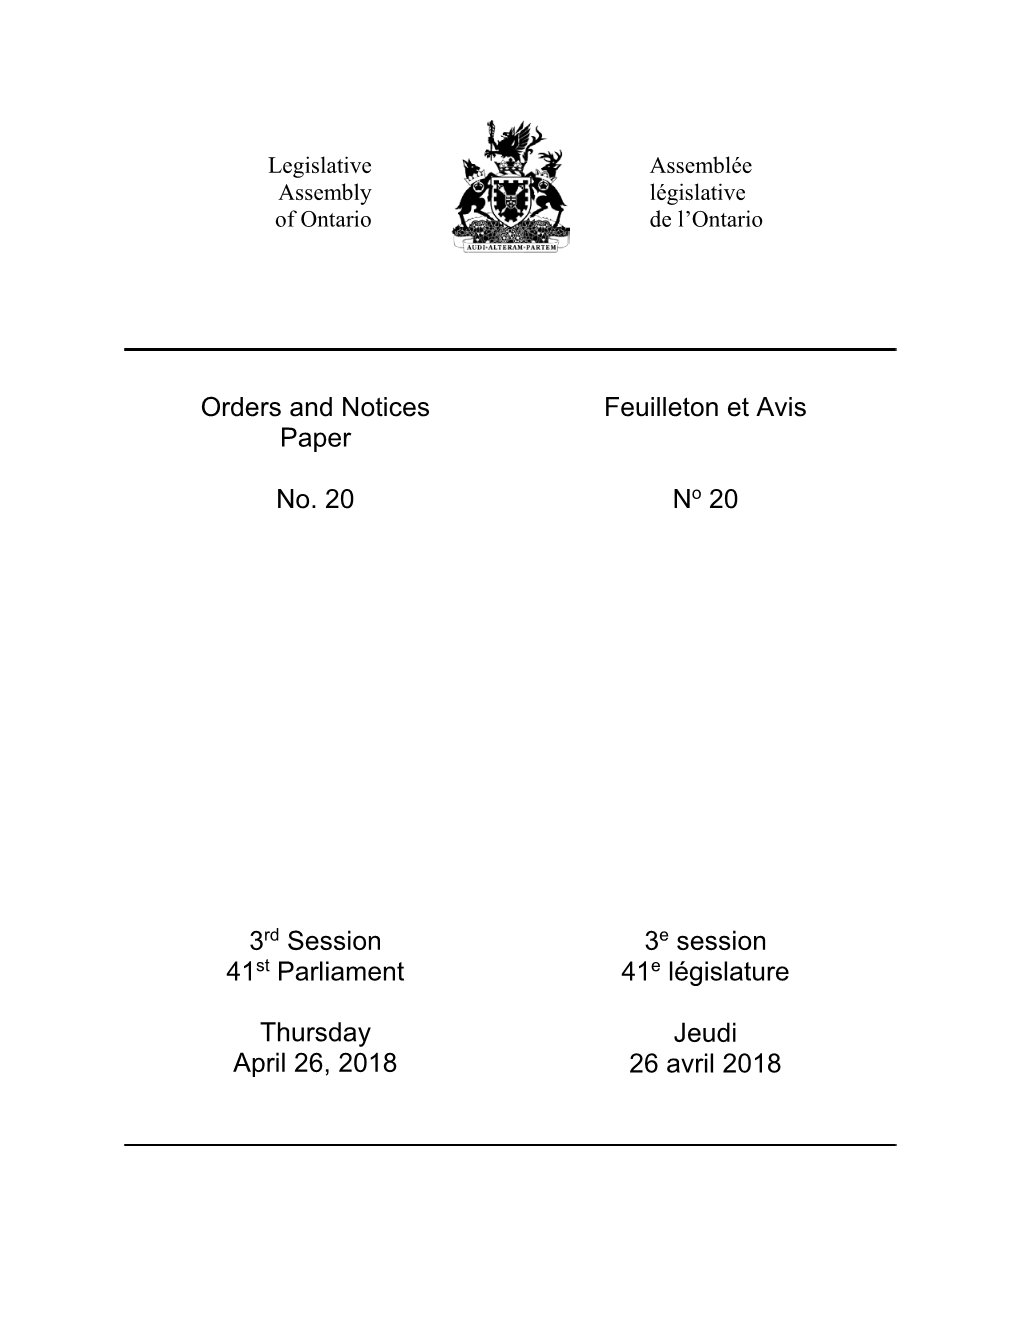 Orders and Notices Feuilleton Et Avis Paper